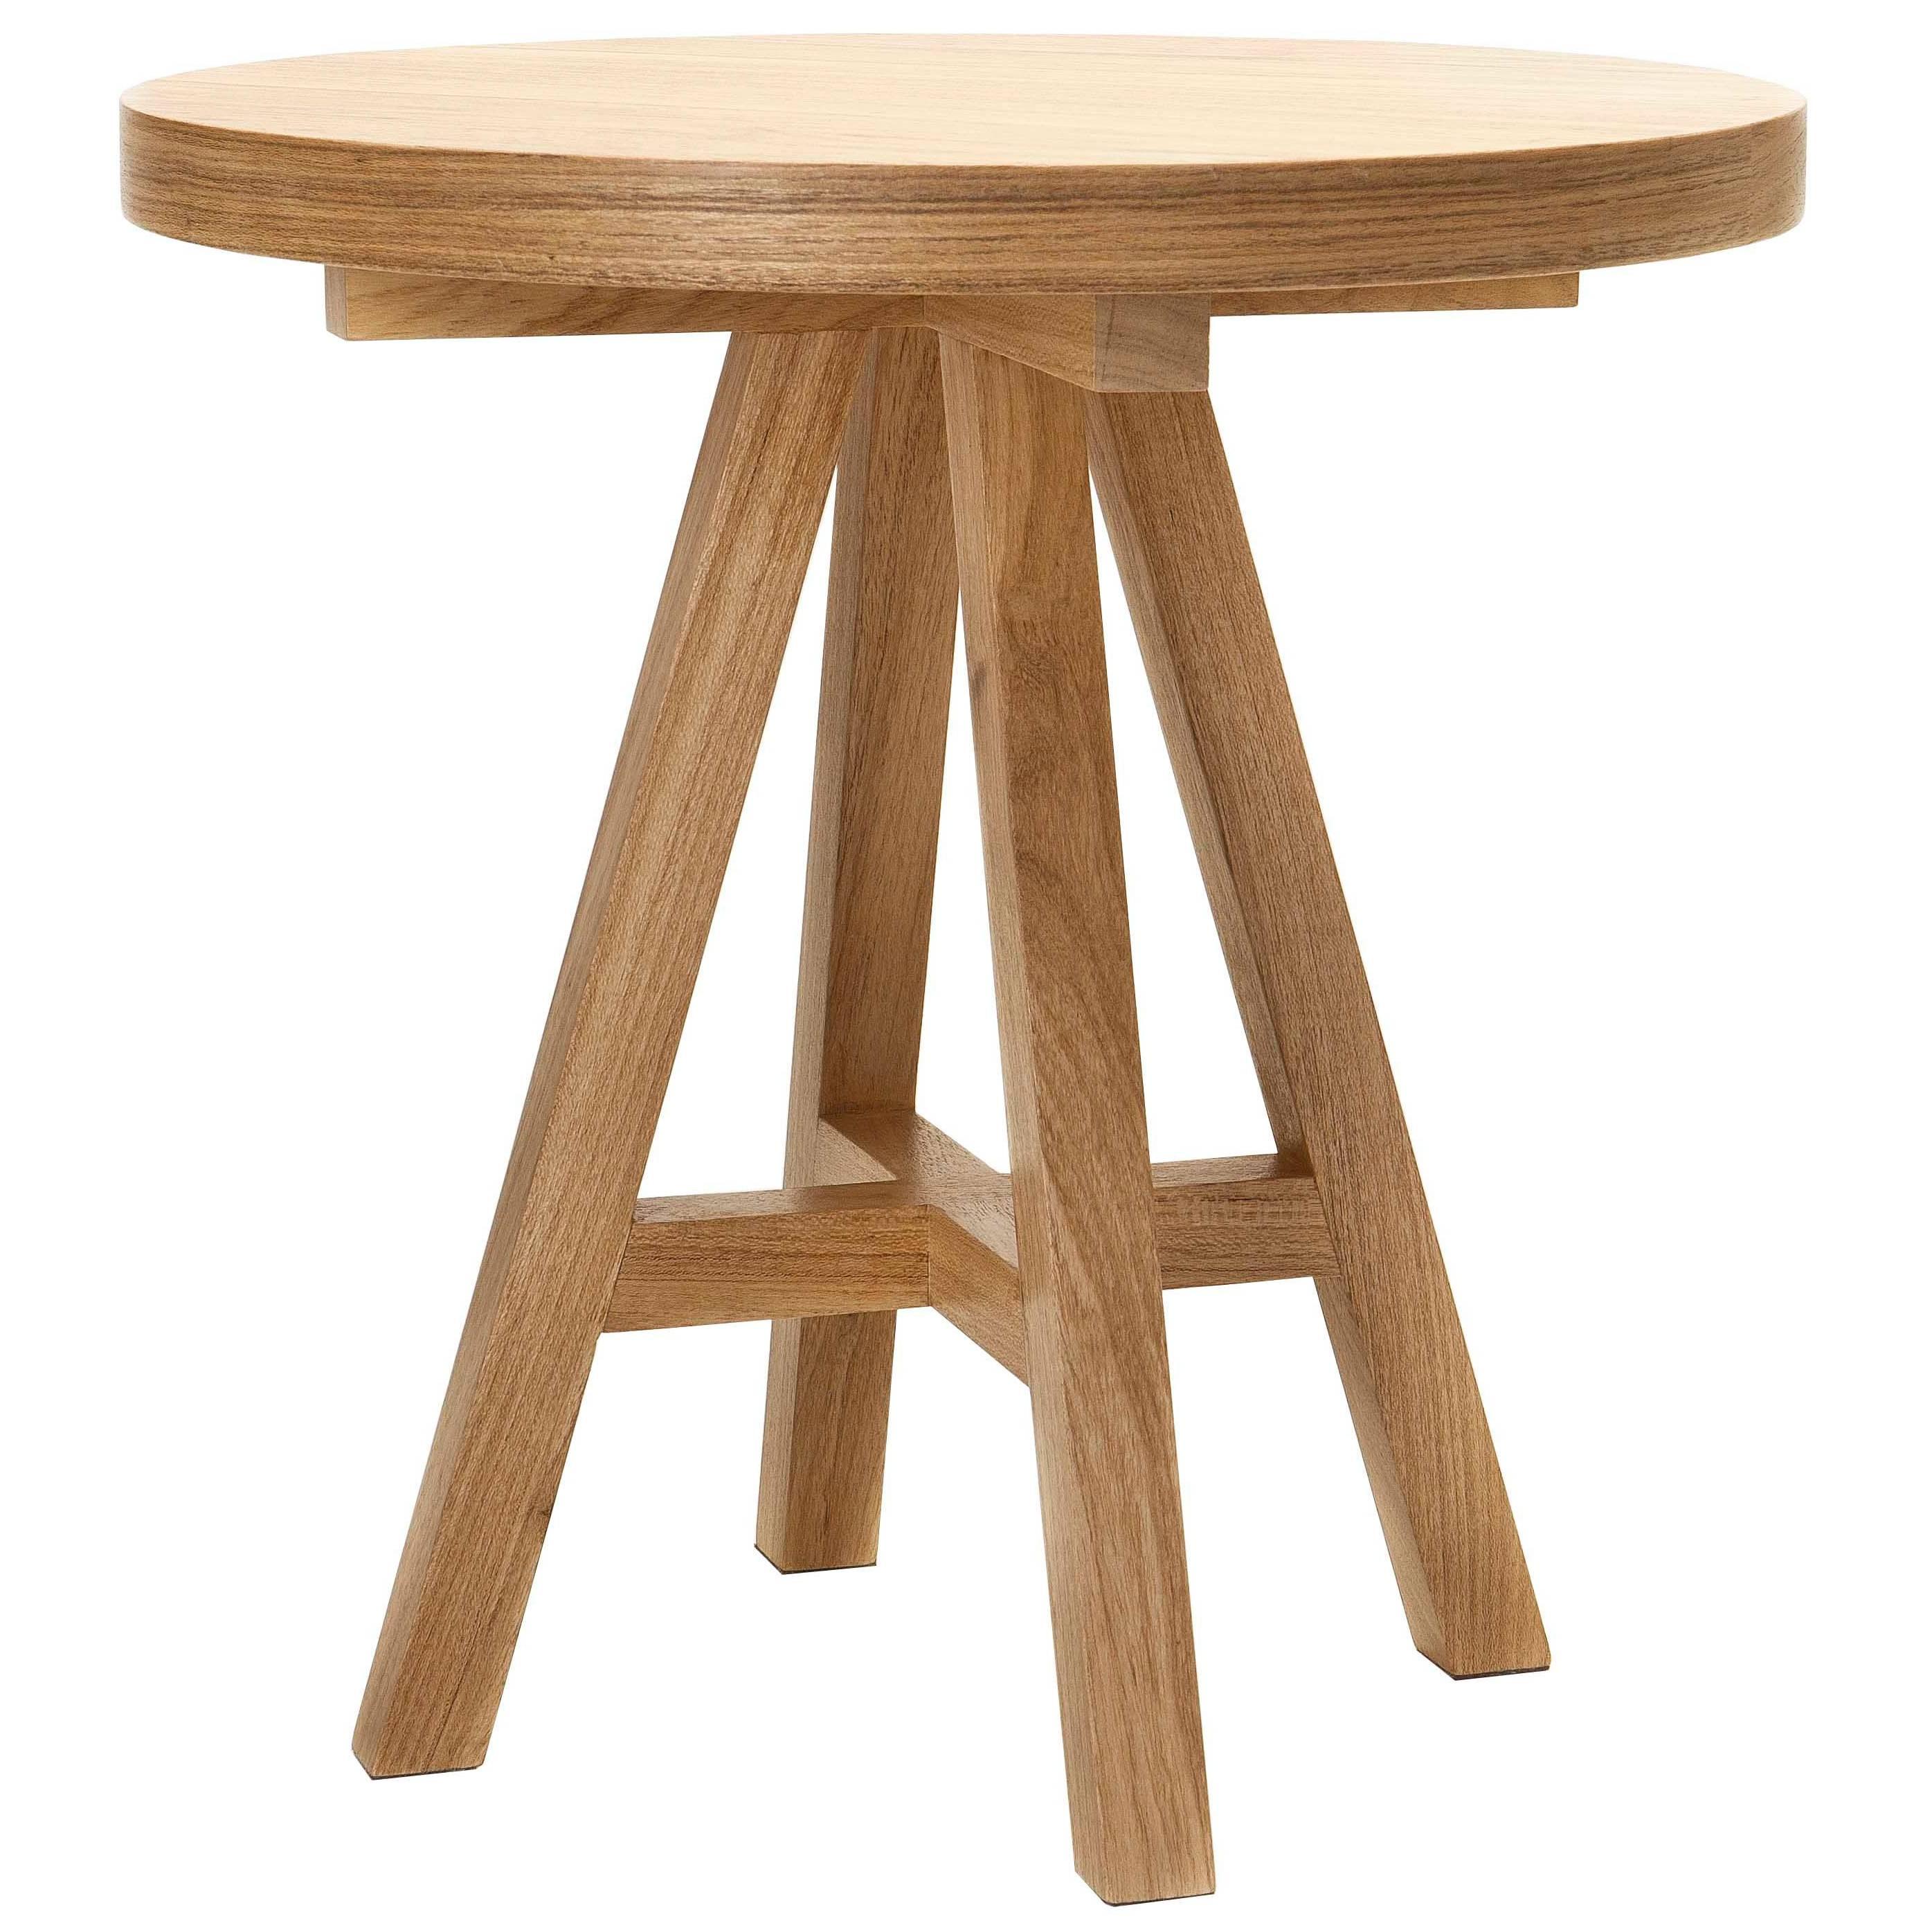 Hardwood Side Table, Contemporary Brazilian Design